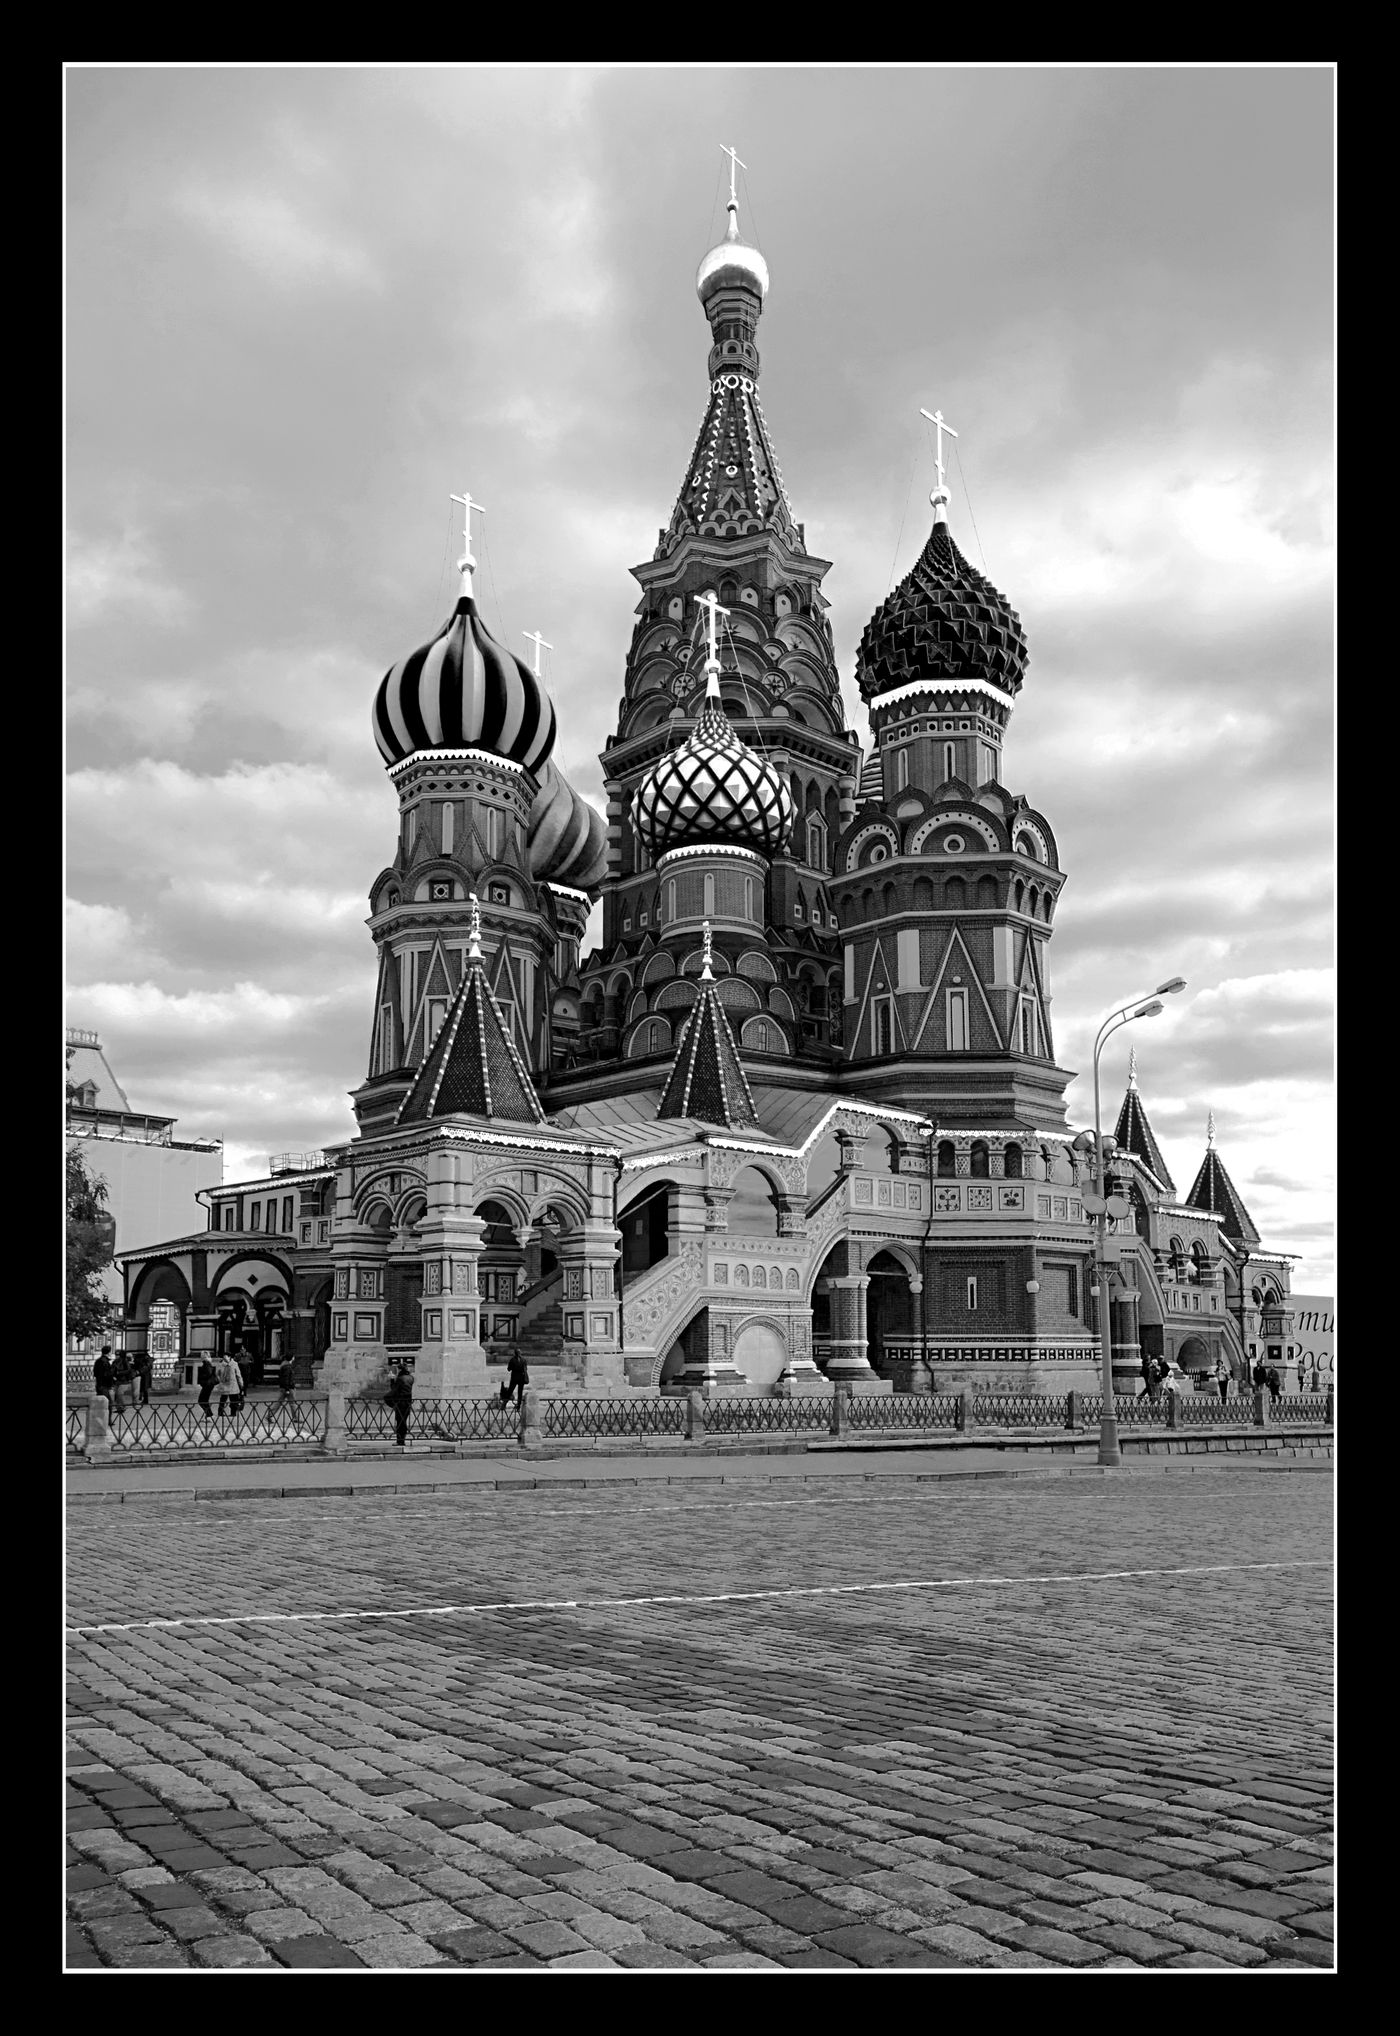 St Basils
St Basils, Red Square Moscow
Keywords: St Basils Red Square Moscow